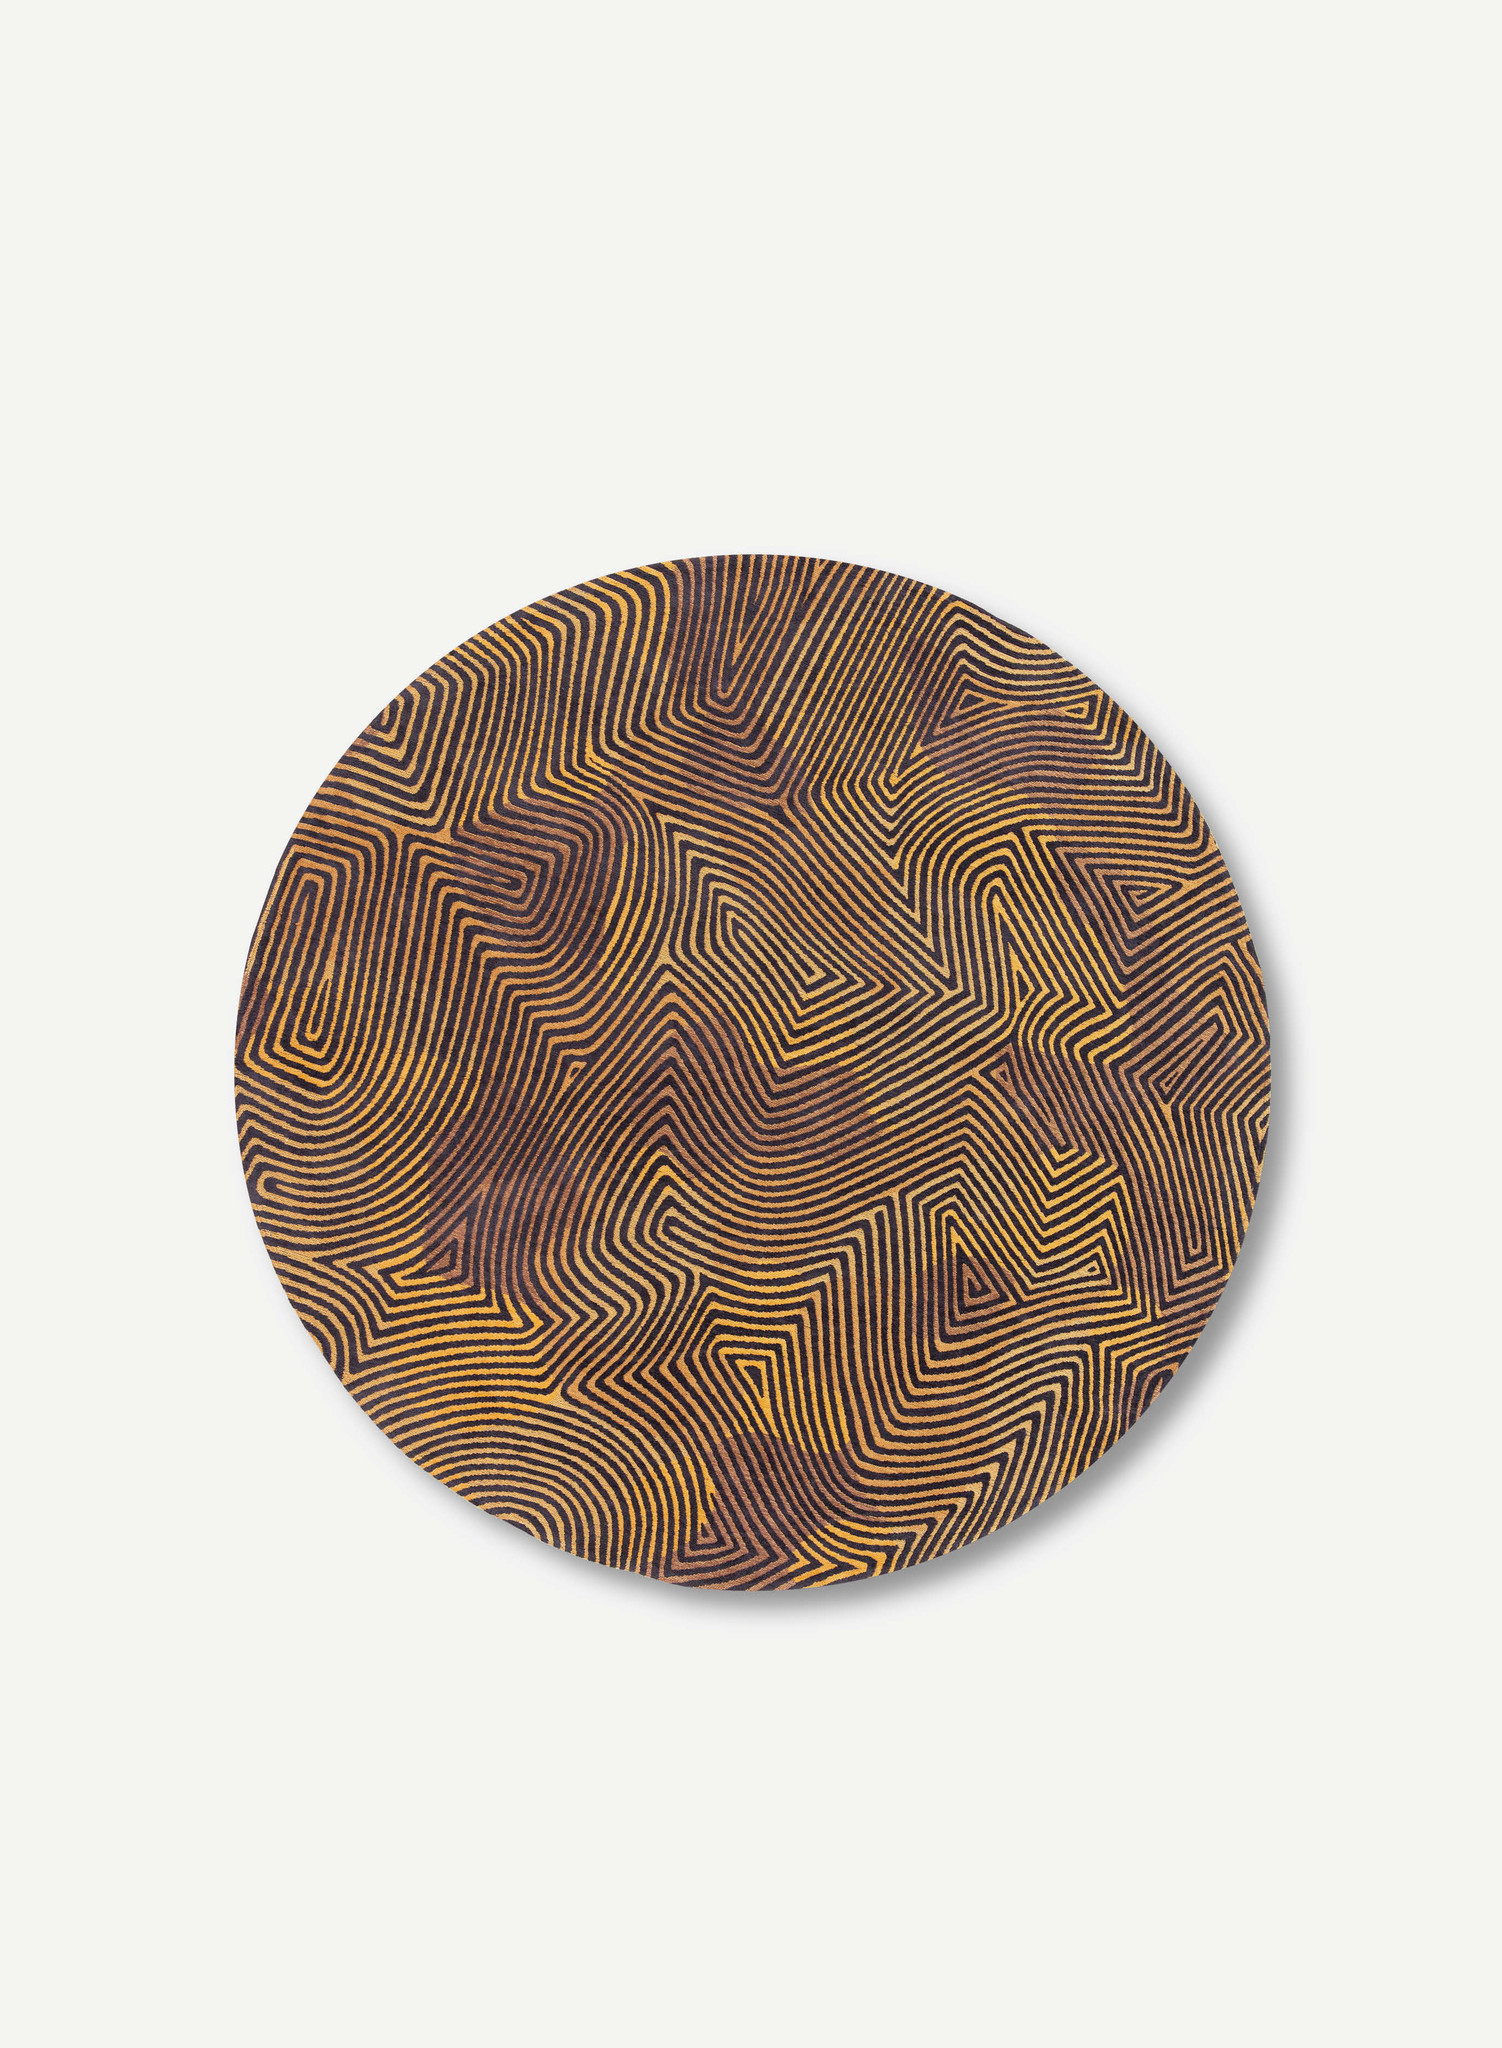 Black Gold Flatwoven Rug ☞ Size: 6' 7" x 9' 2" (200 x 280 cm)